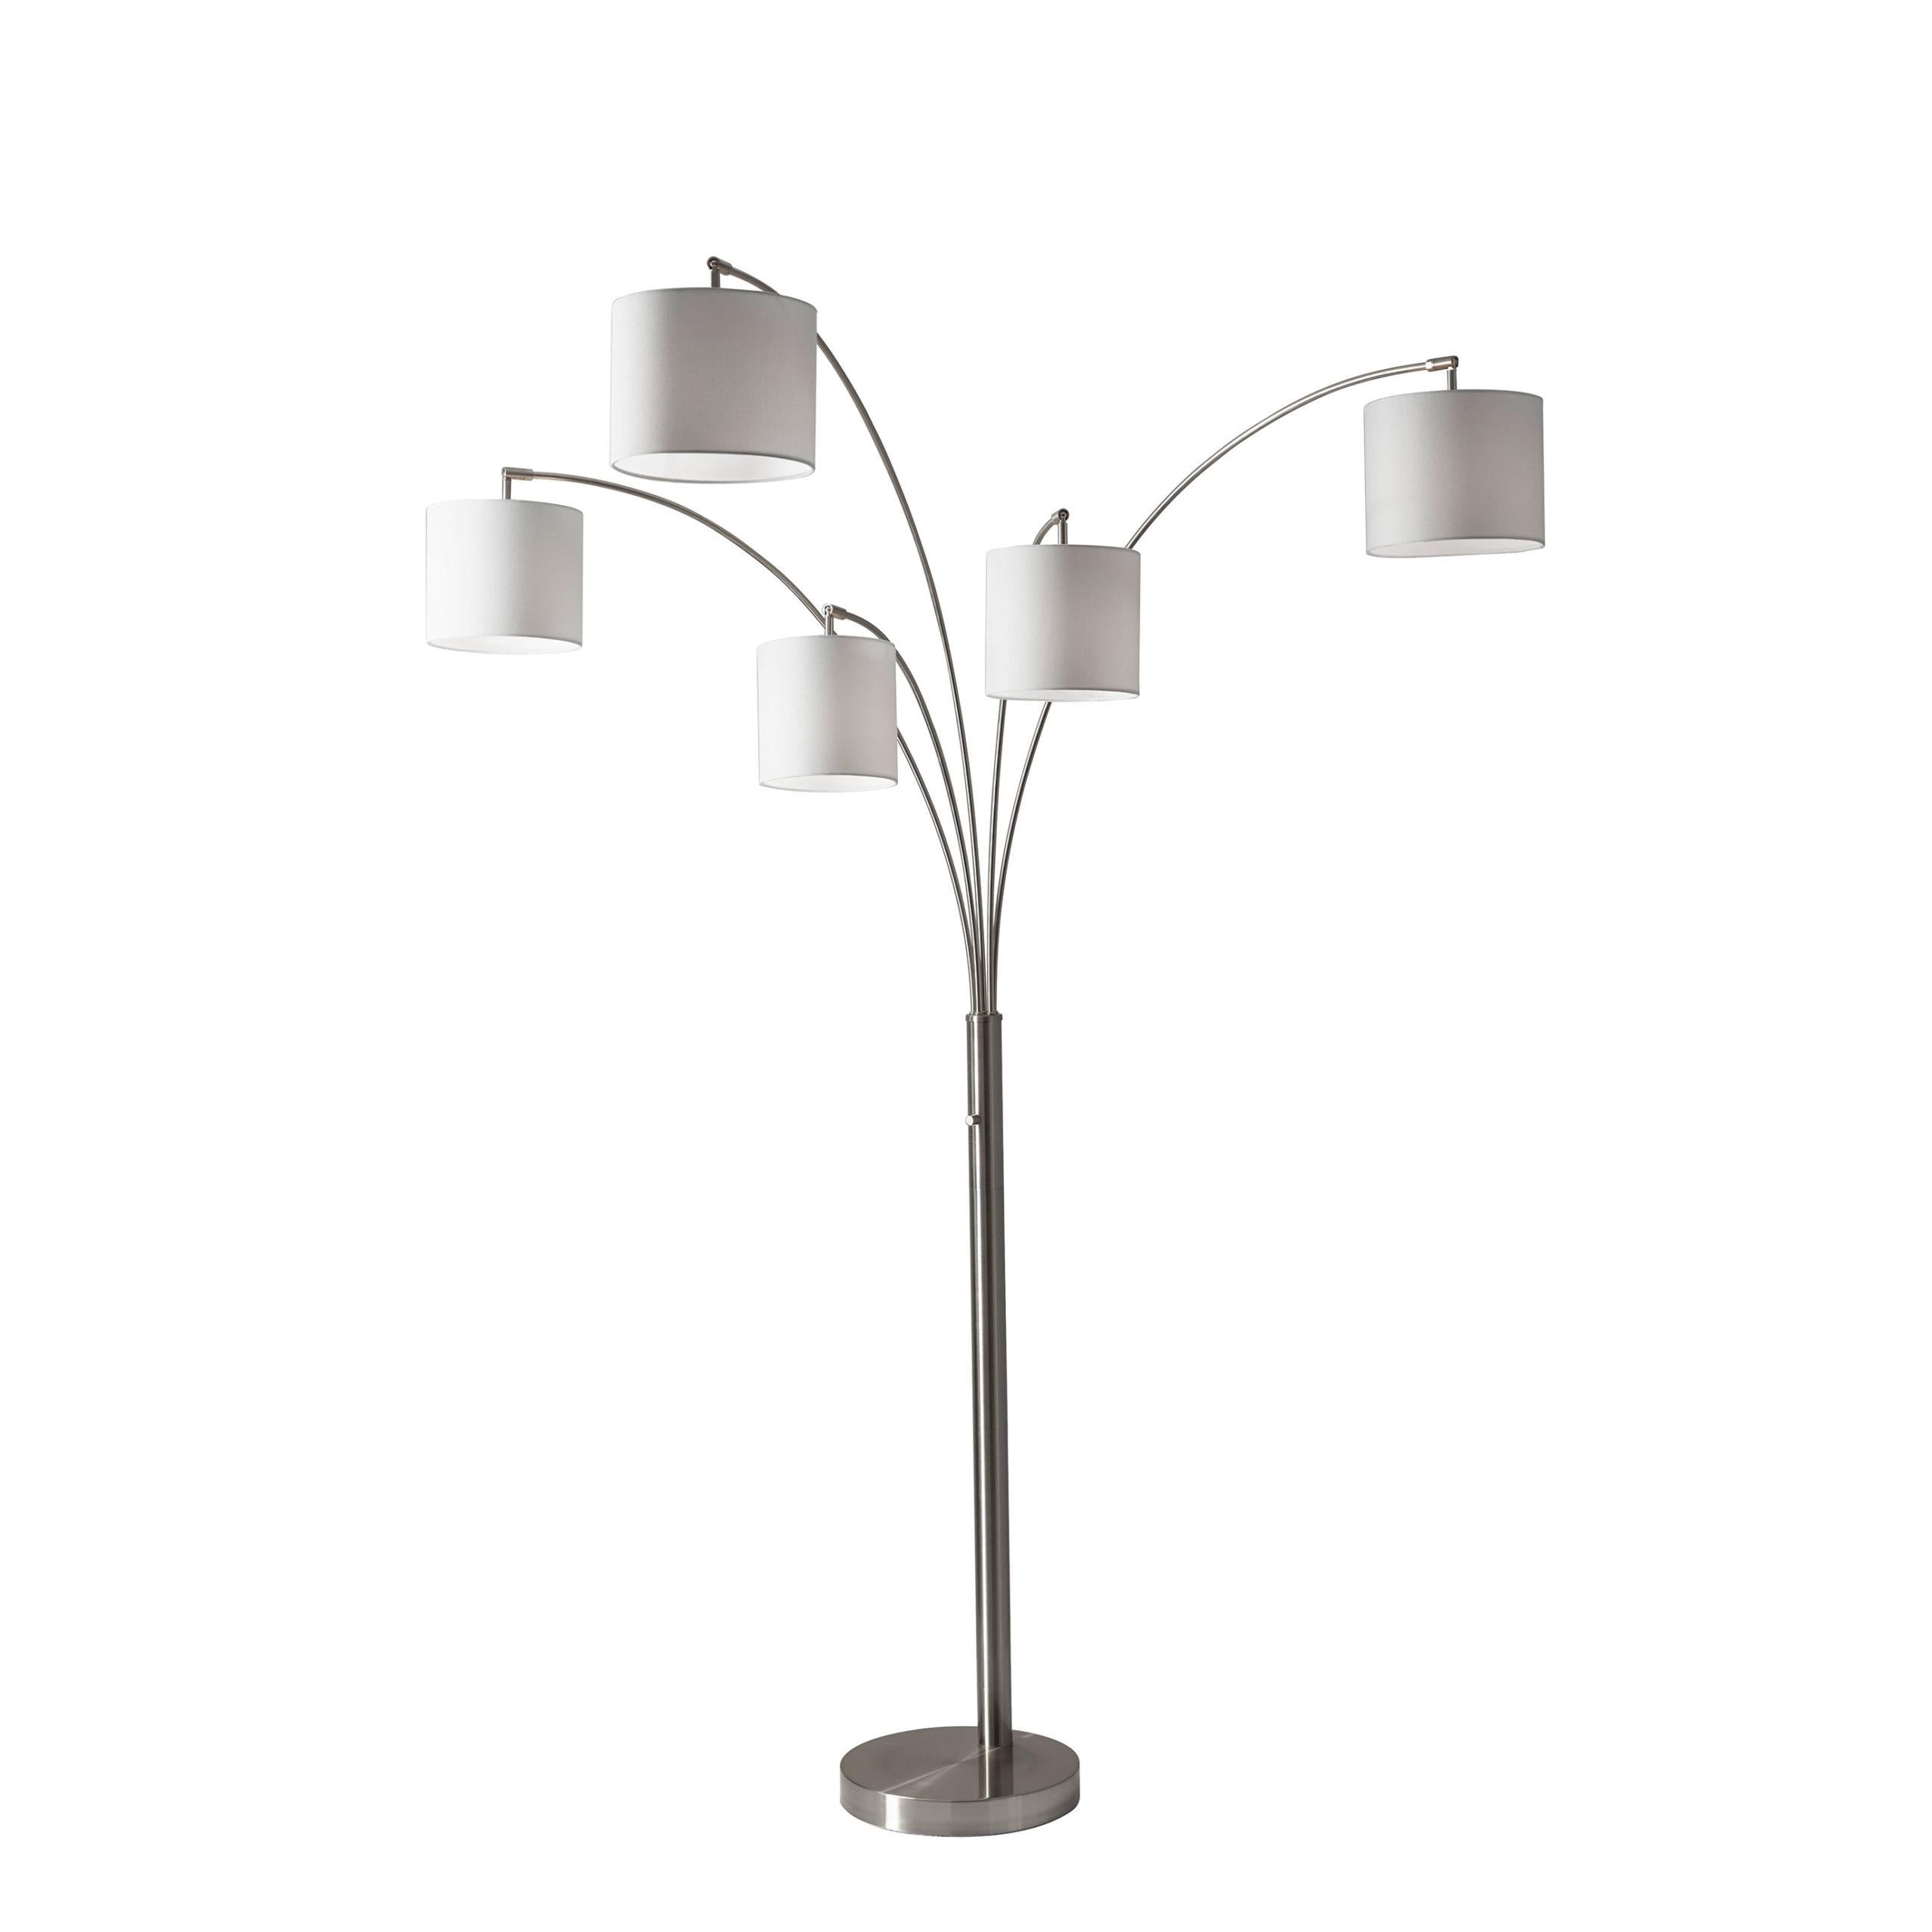 Floor lamp Stainless steel - 4239-22 | ADESSO